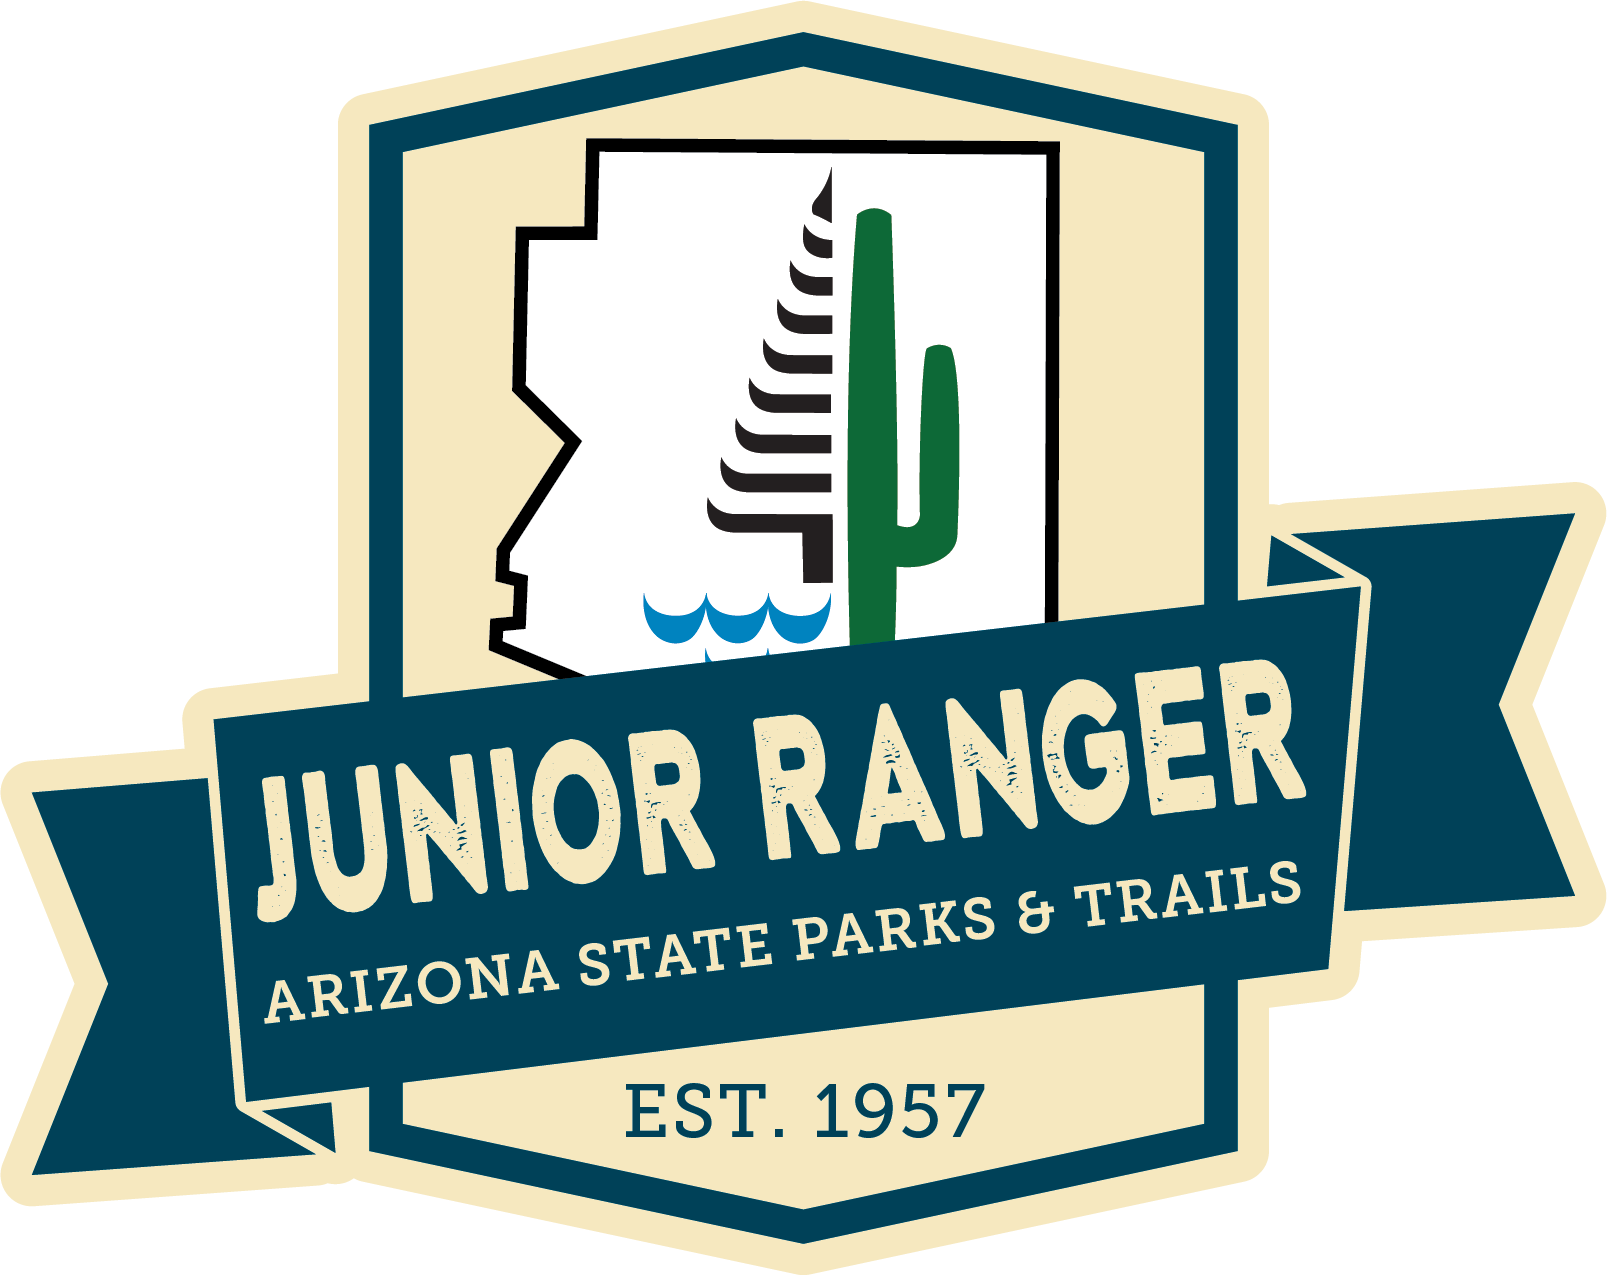 Junior Ranger program at River Island State Park